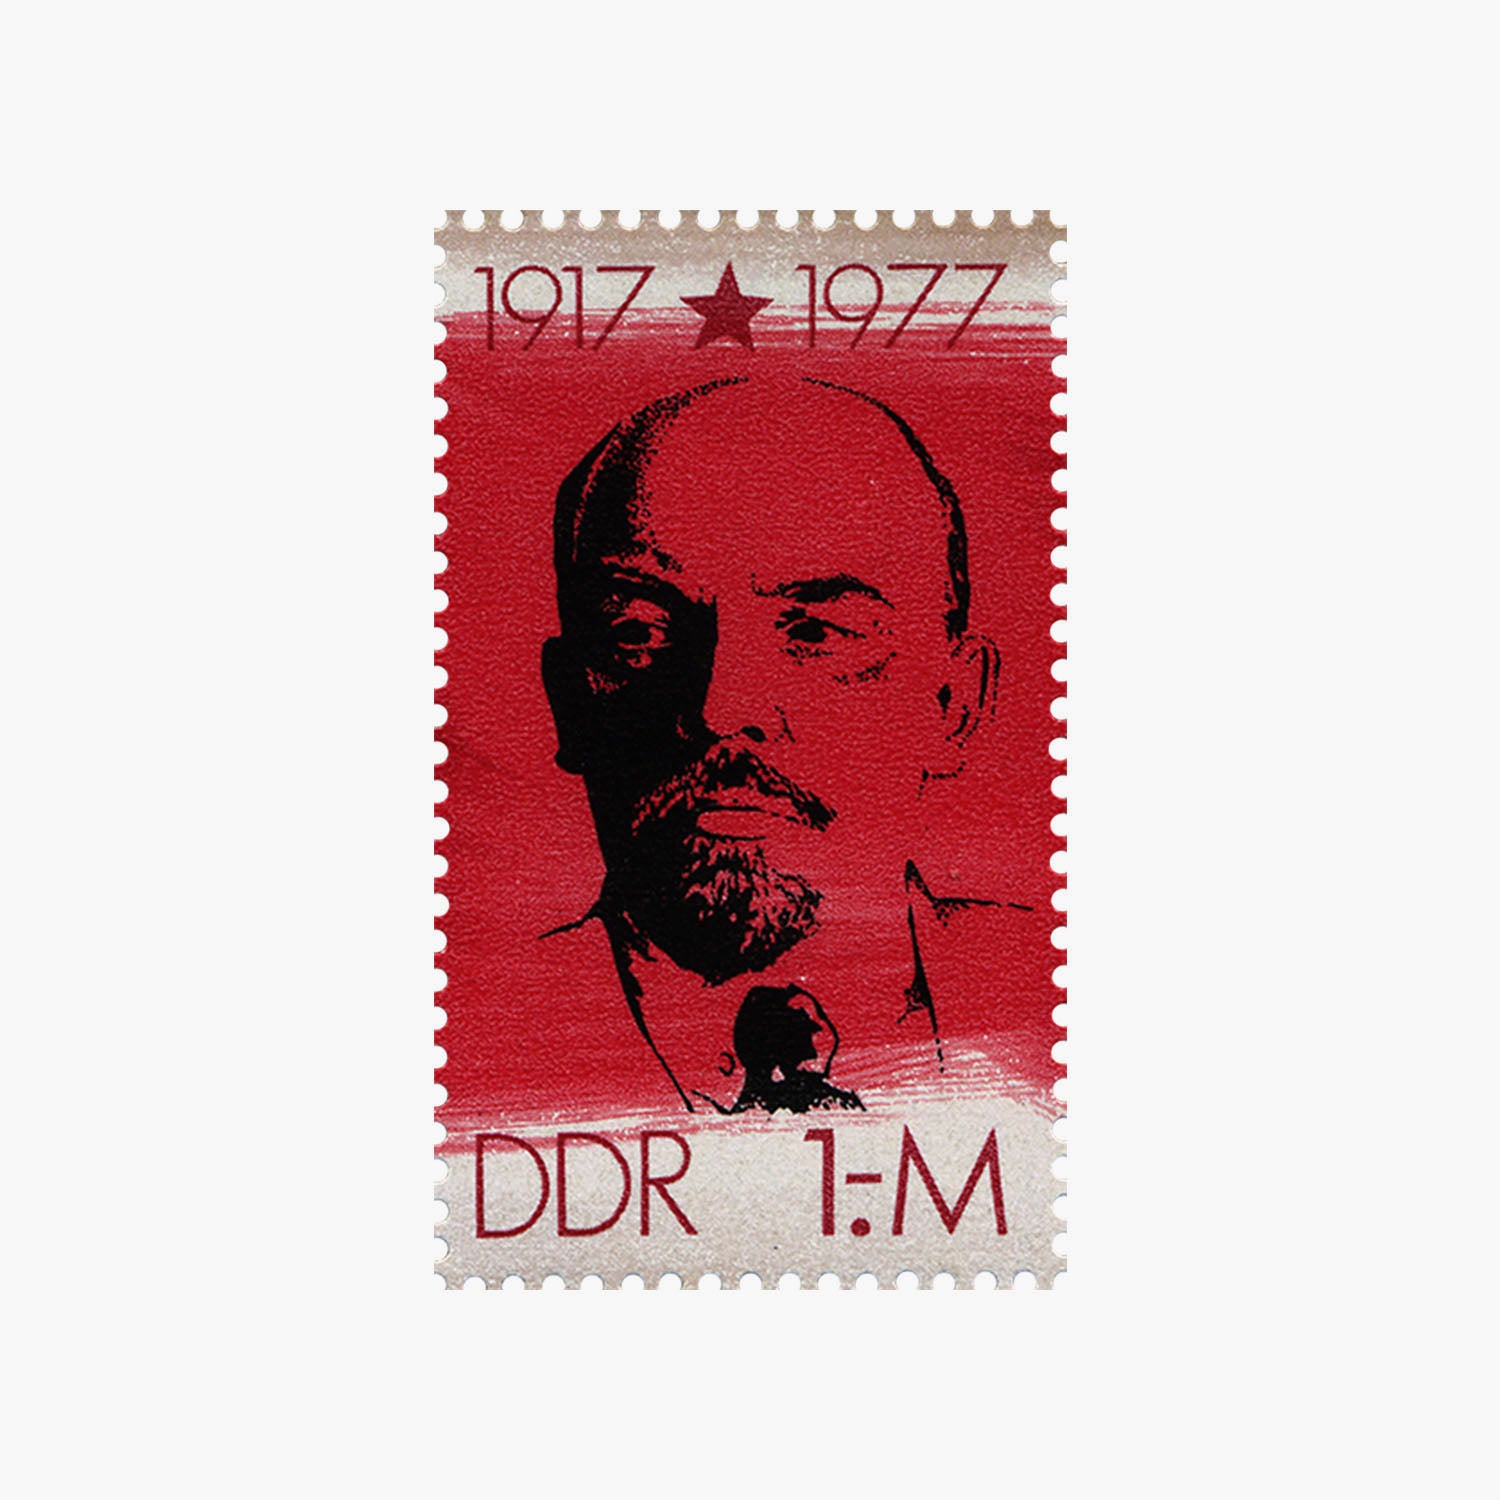 Lenin The Revolutionary Collector Set